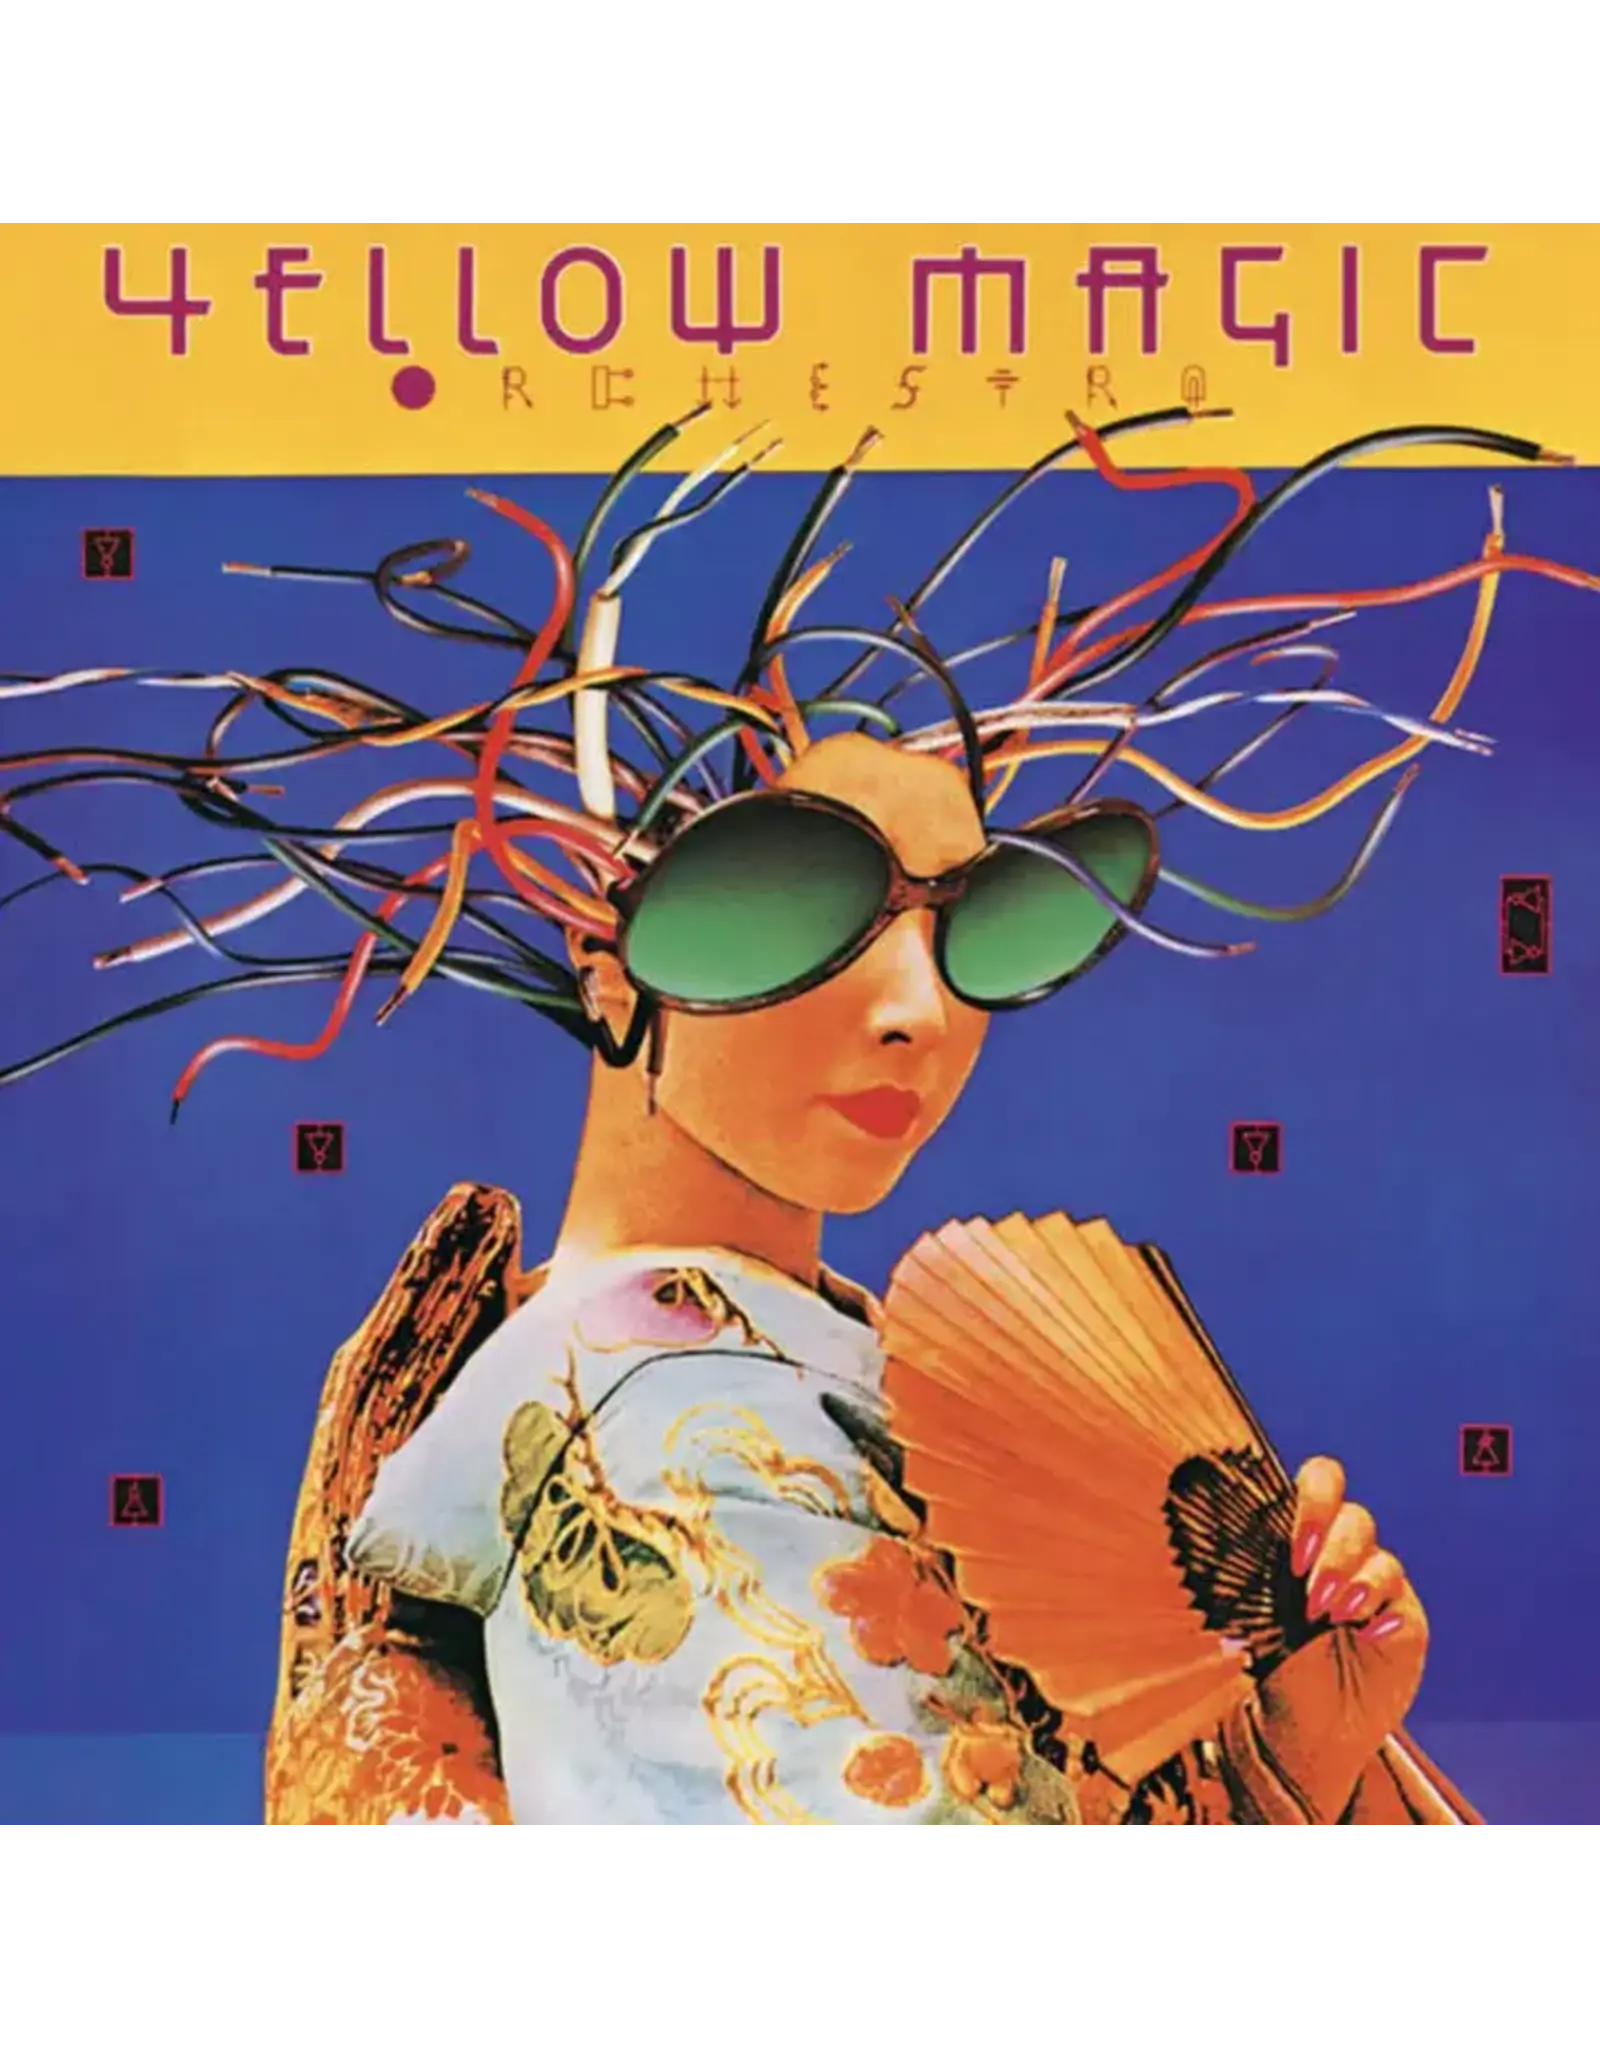 Great Tracks Yellow Magic Orchestra: YMO-USA LP